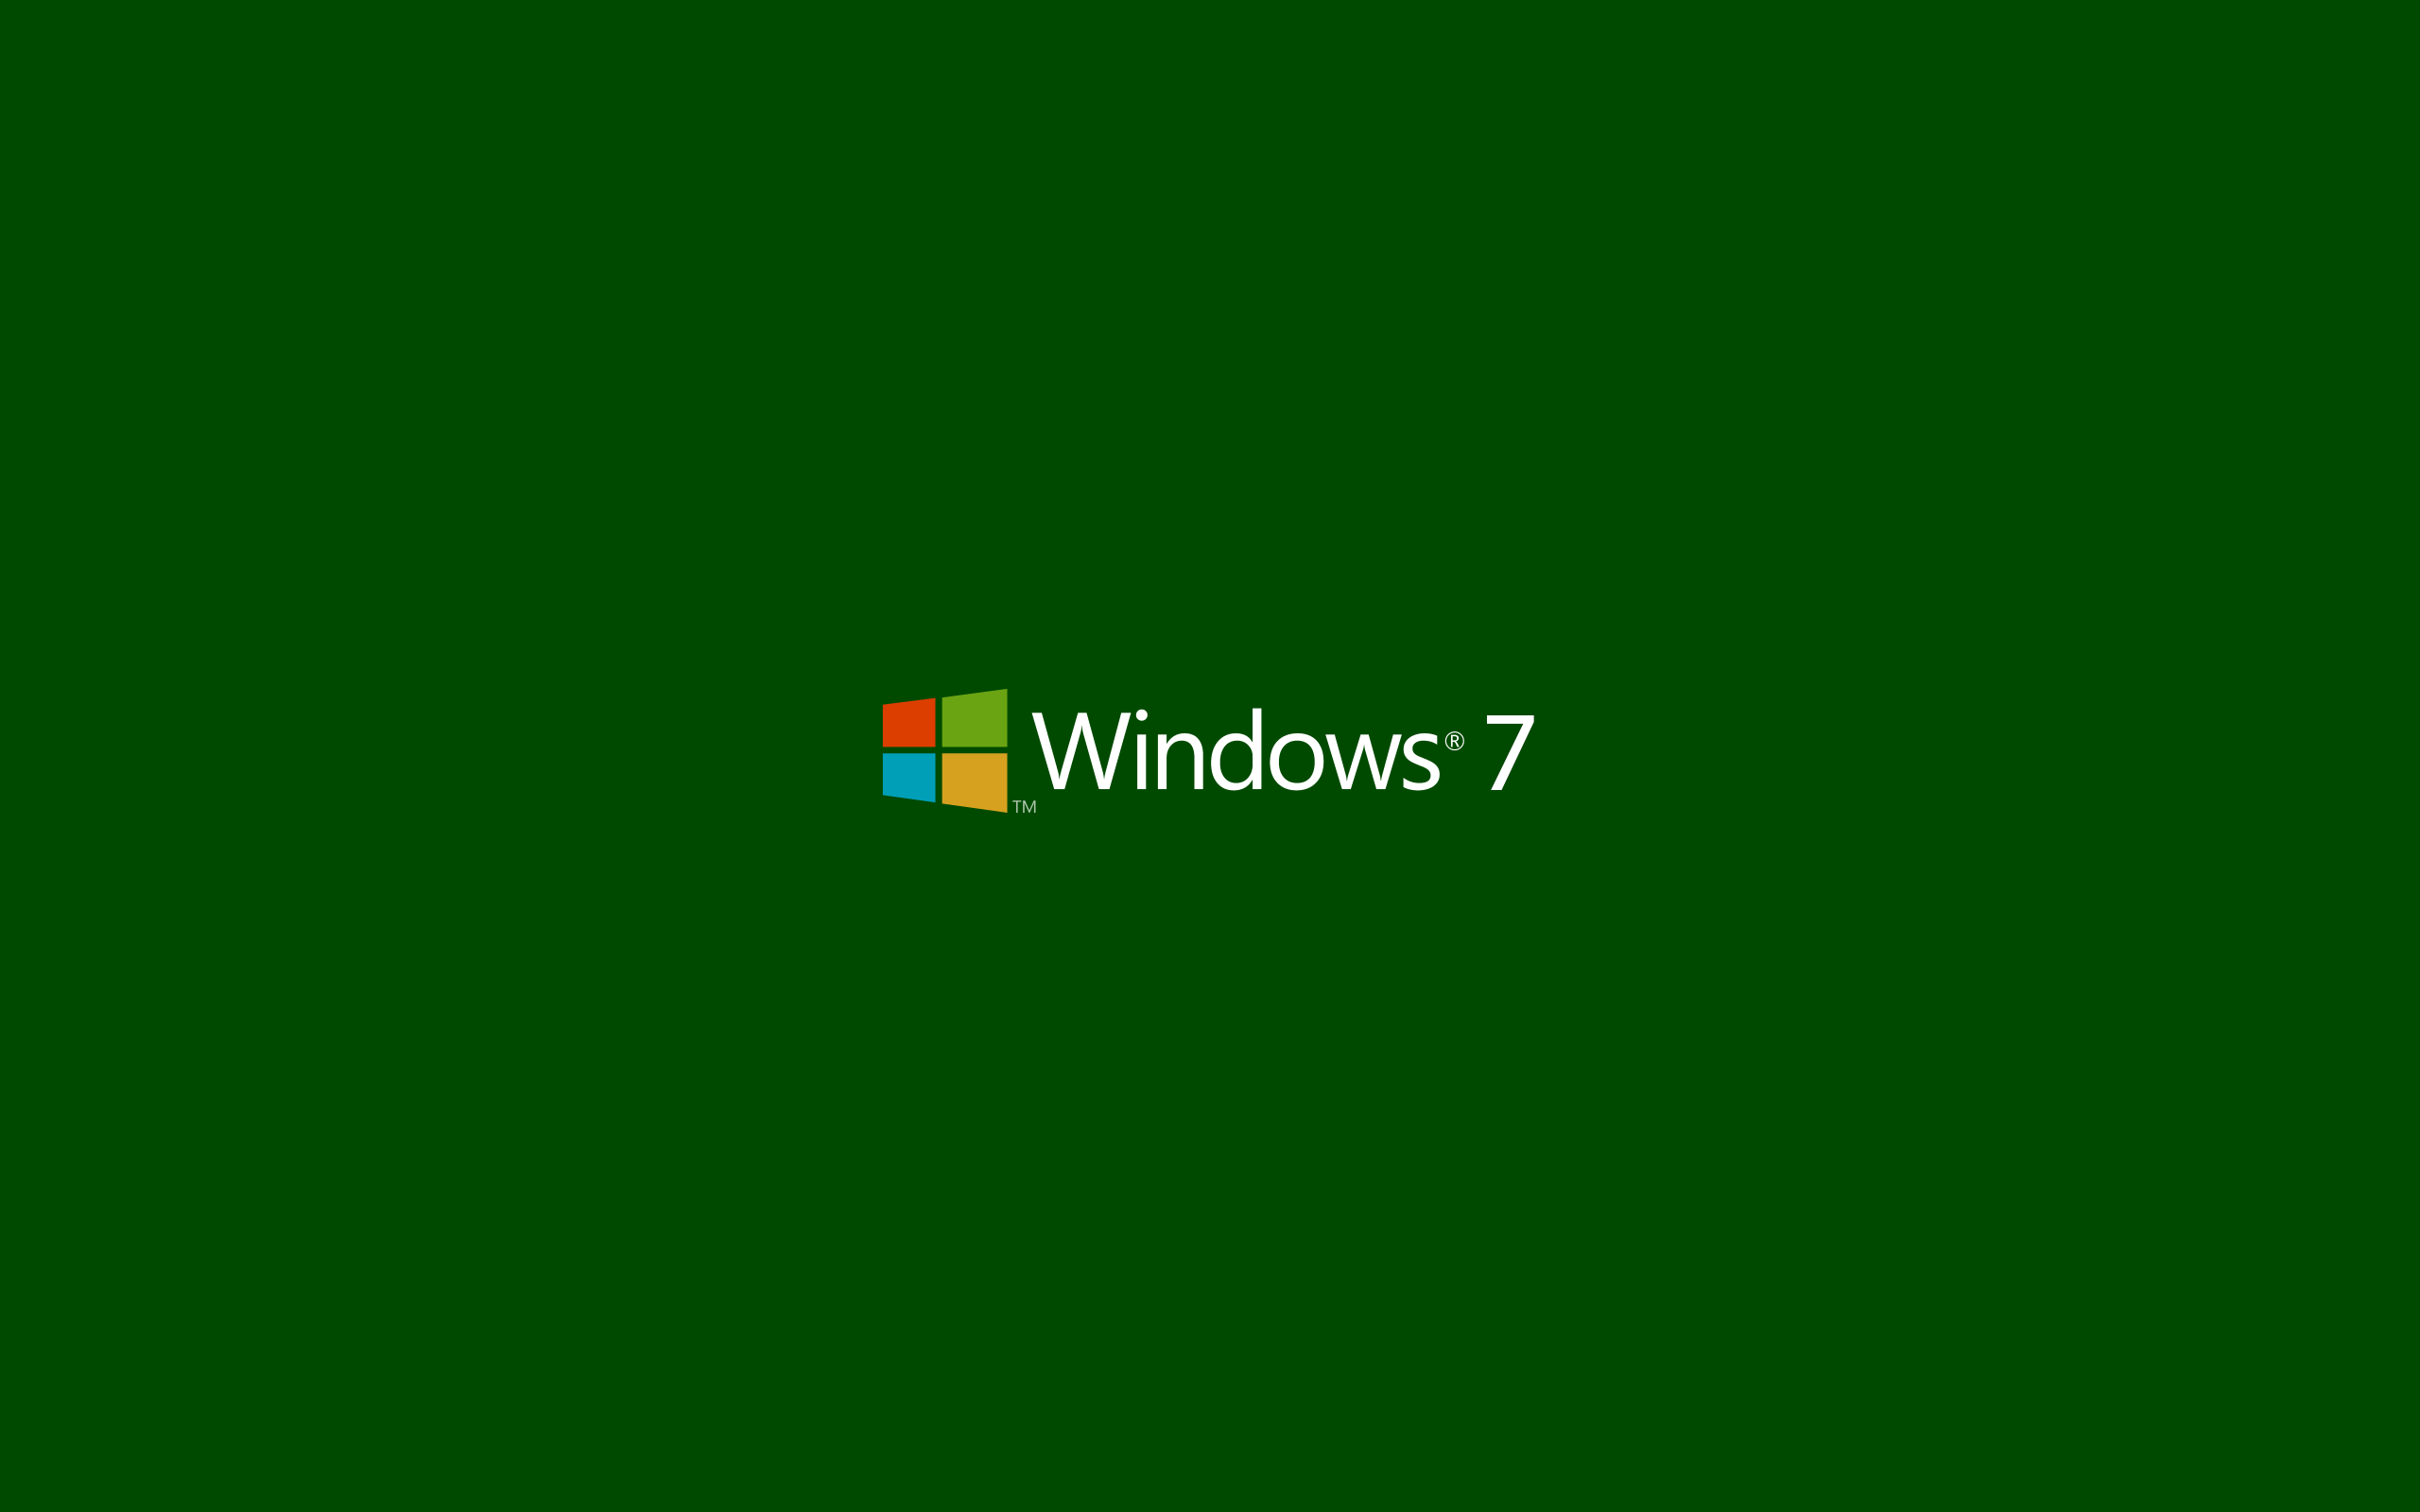 General 2560x1600 Windows 7 Microsoft Windows operating system minimalism simple background logo green background